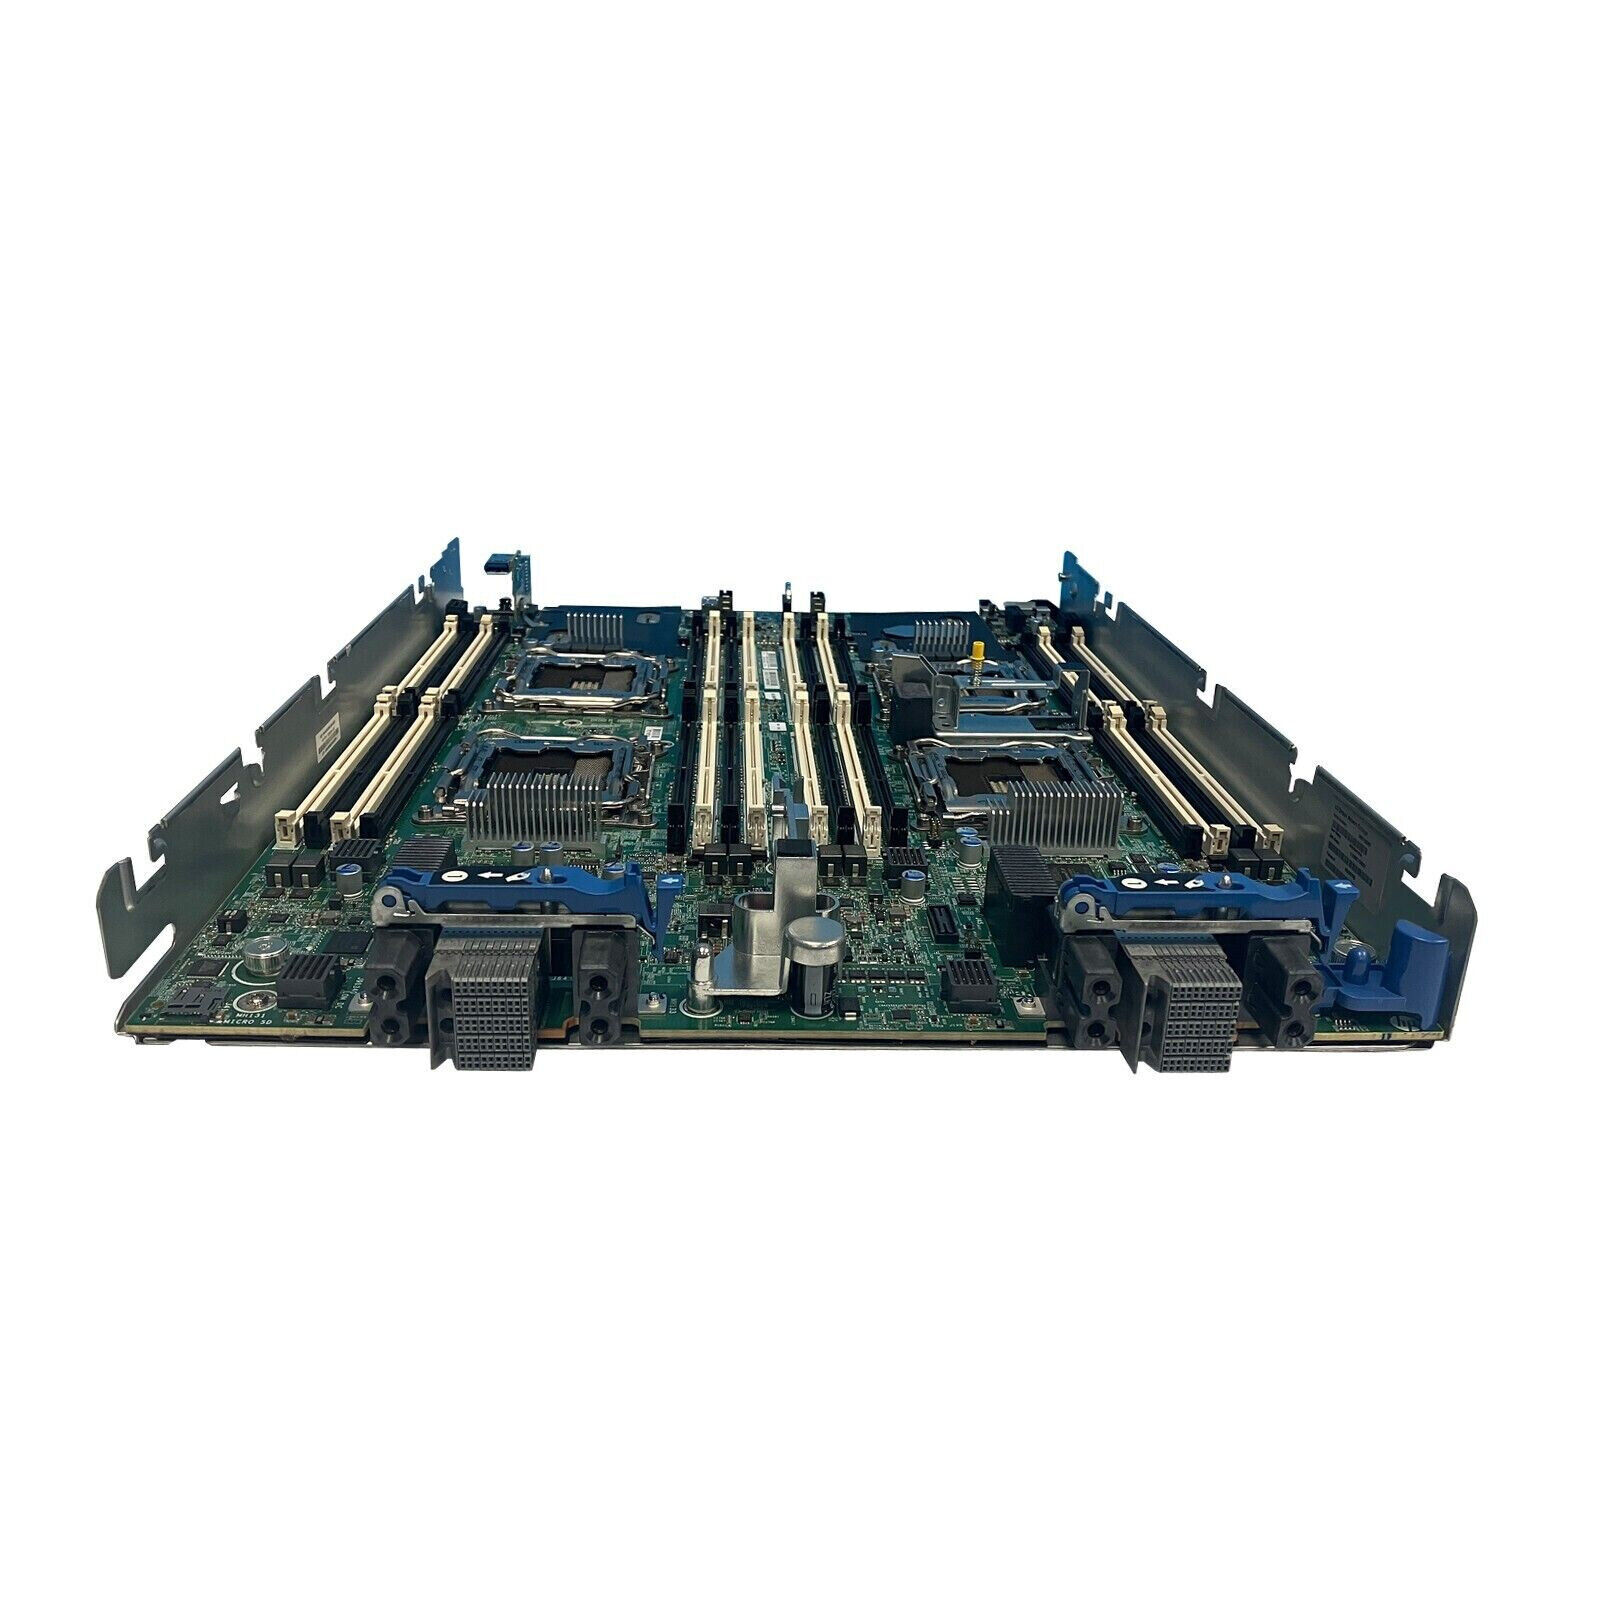 New HPE 858552-001 System board BL660C Gen9 v4 747354-002